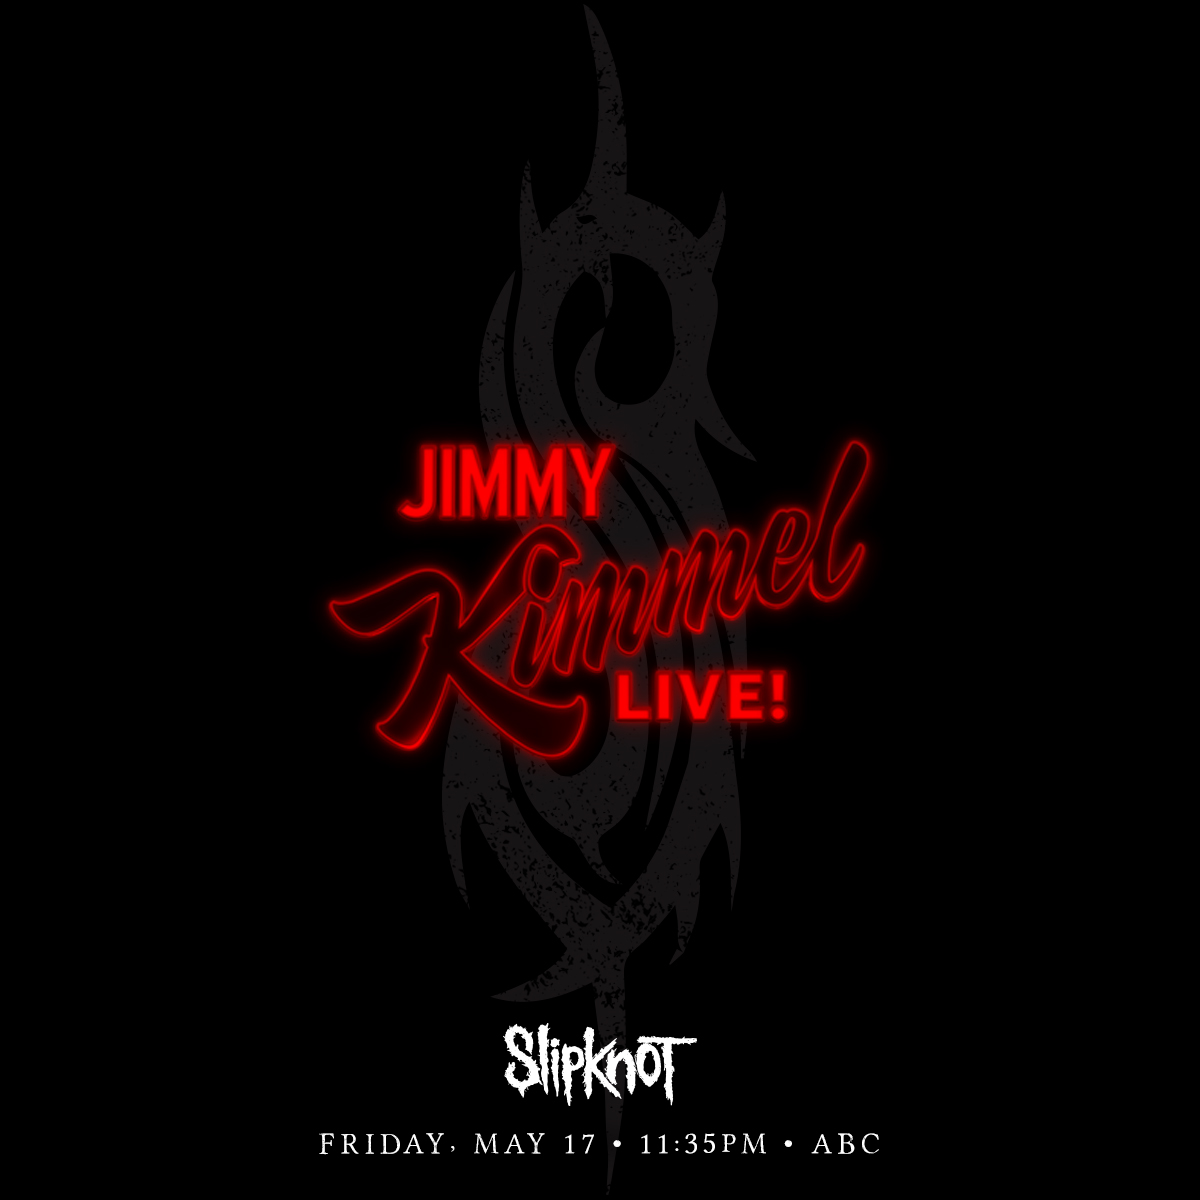 Announcing Jimmy Kimmel Live! Performance